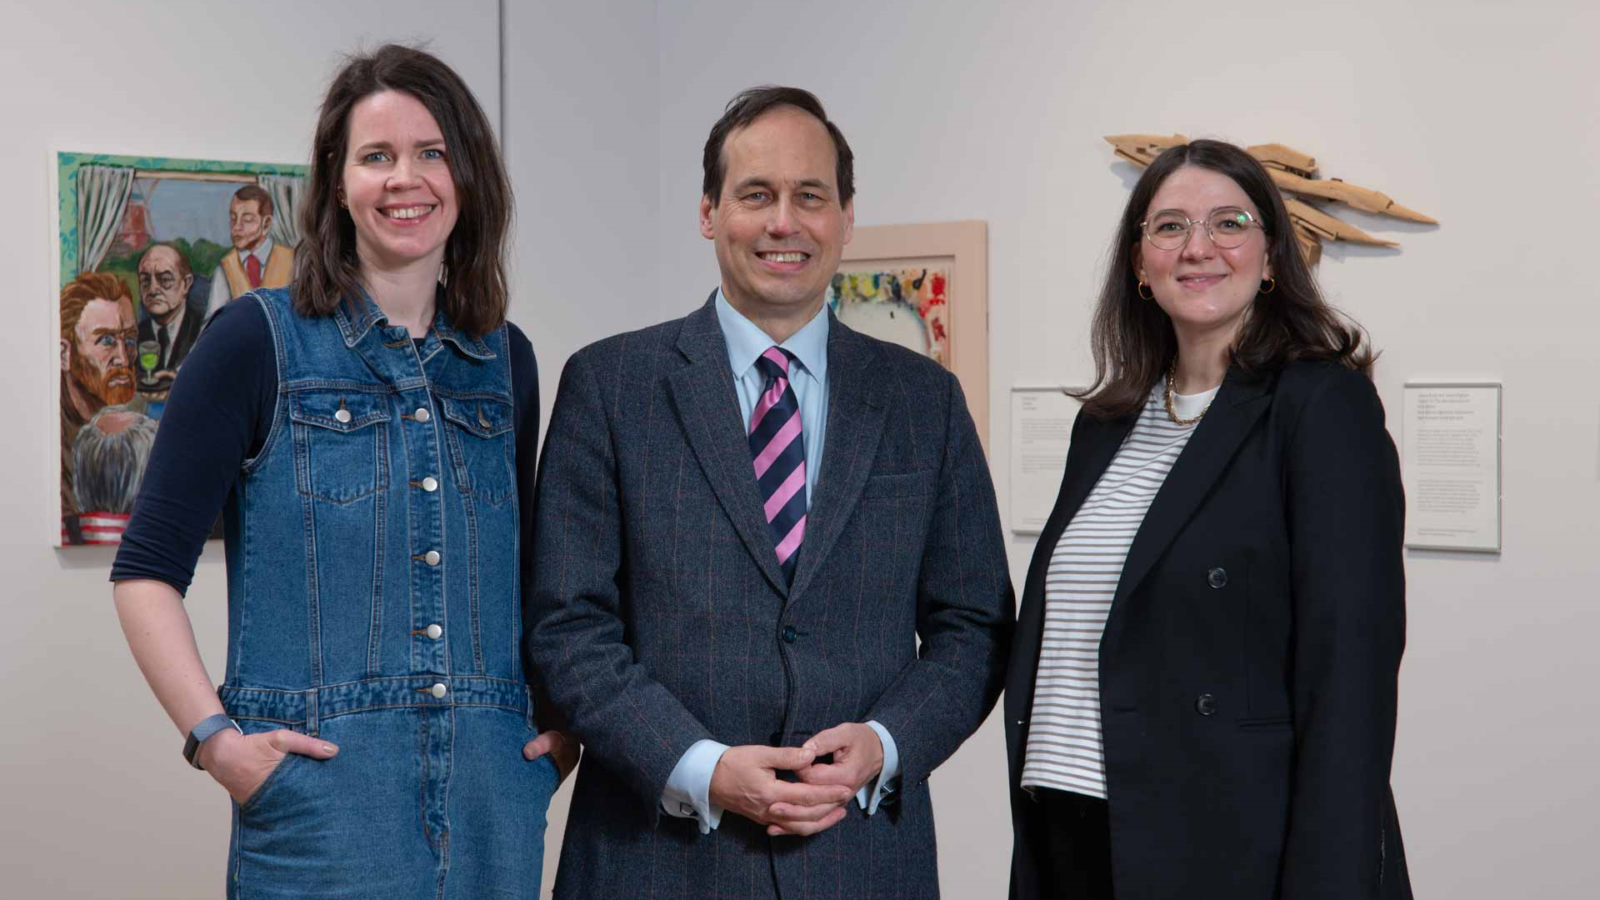 Gordon Contemporaries exhibition opens at Aberdeen Art Gallery